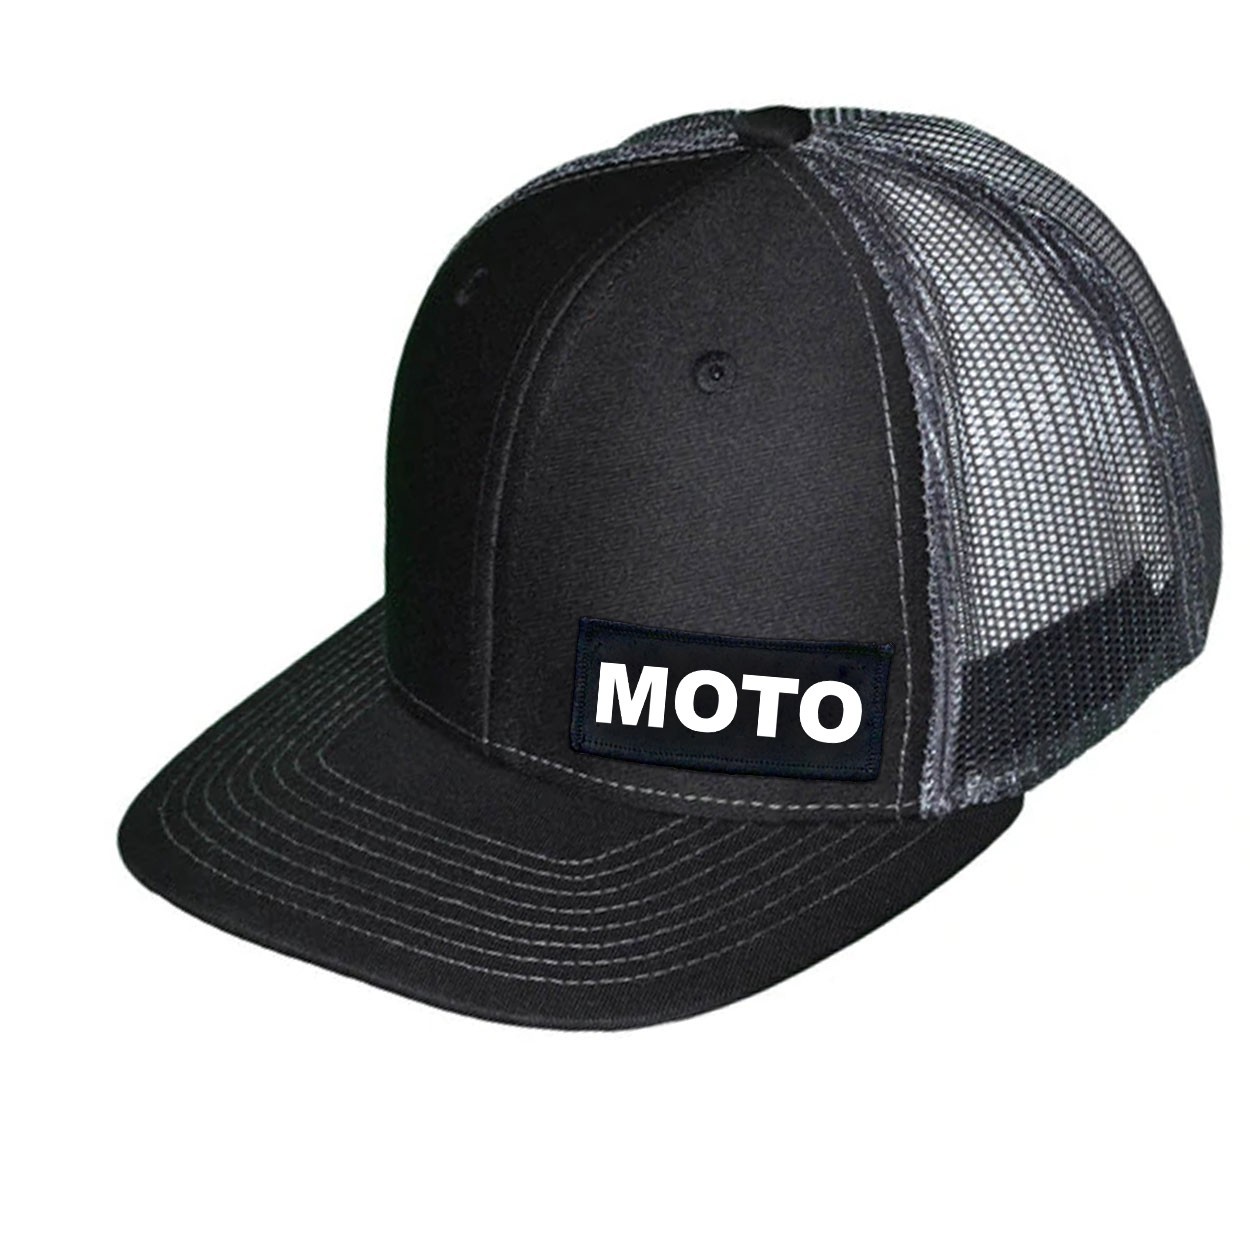 Moto Brand Logo Night Out Woven Patch Snapback Trucker Hat Black/Gray